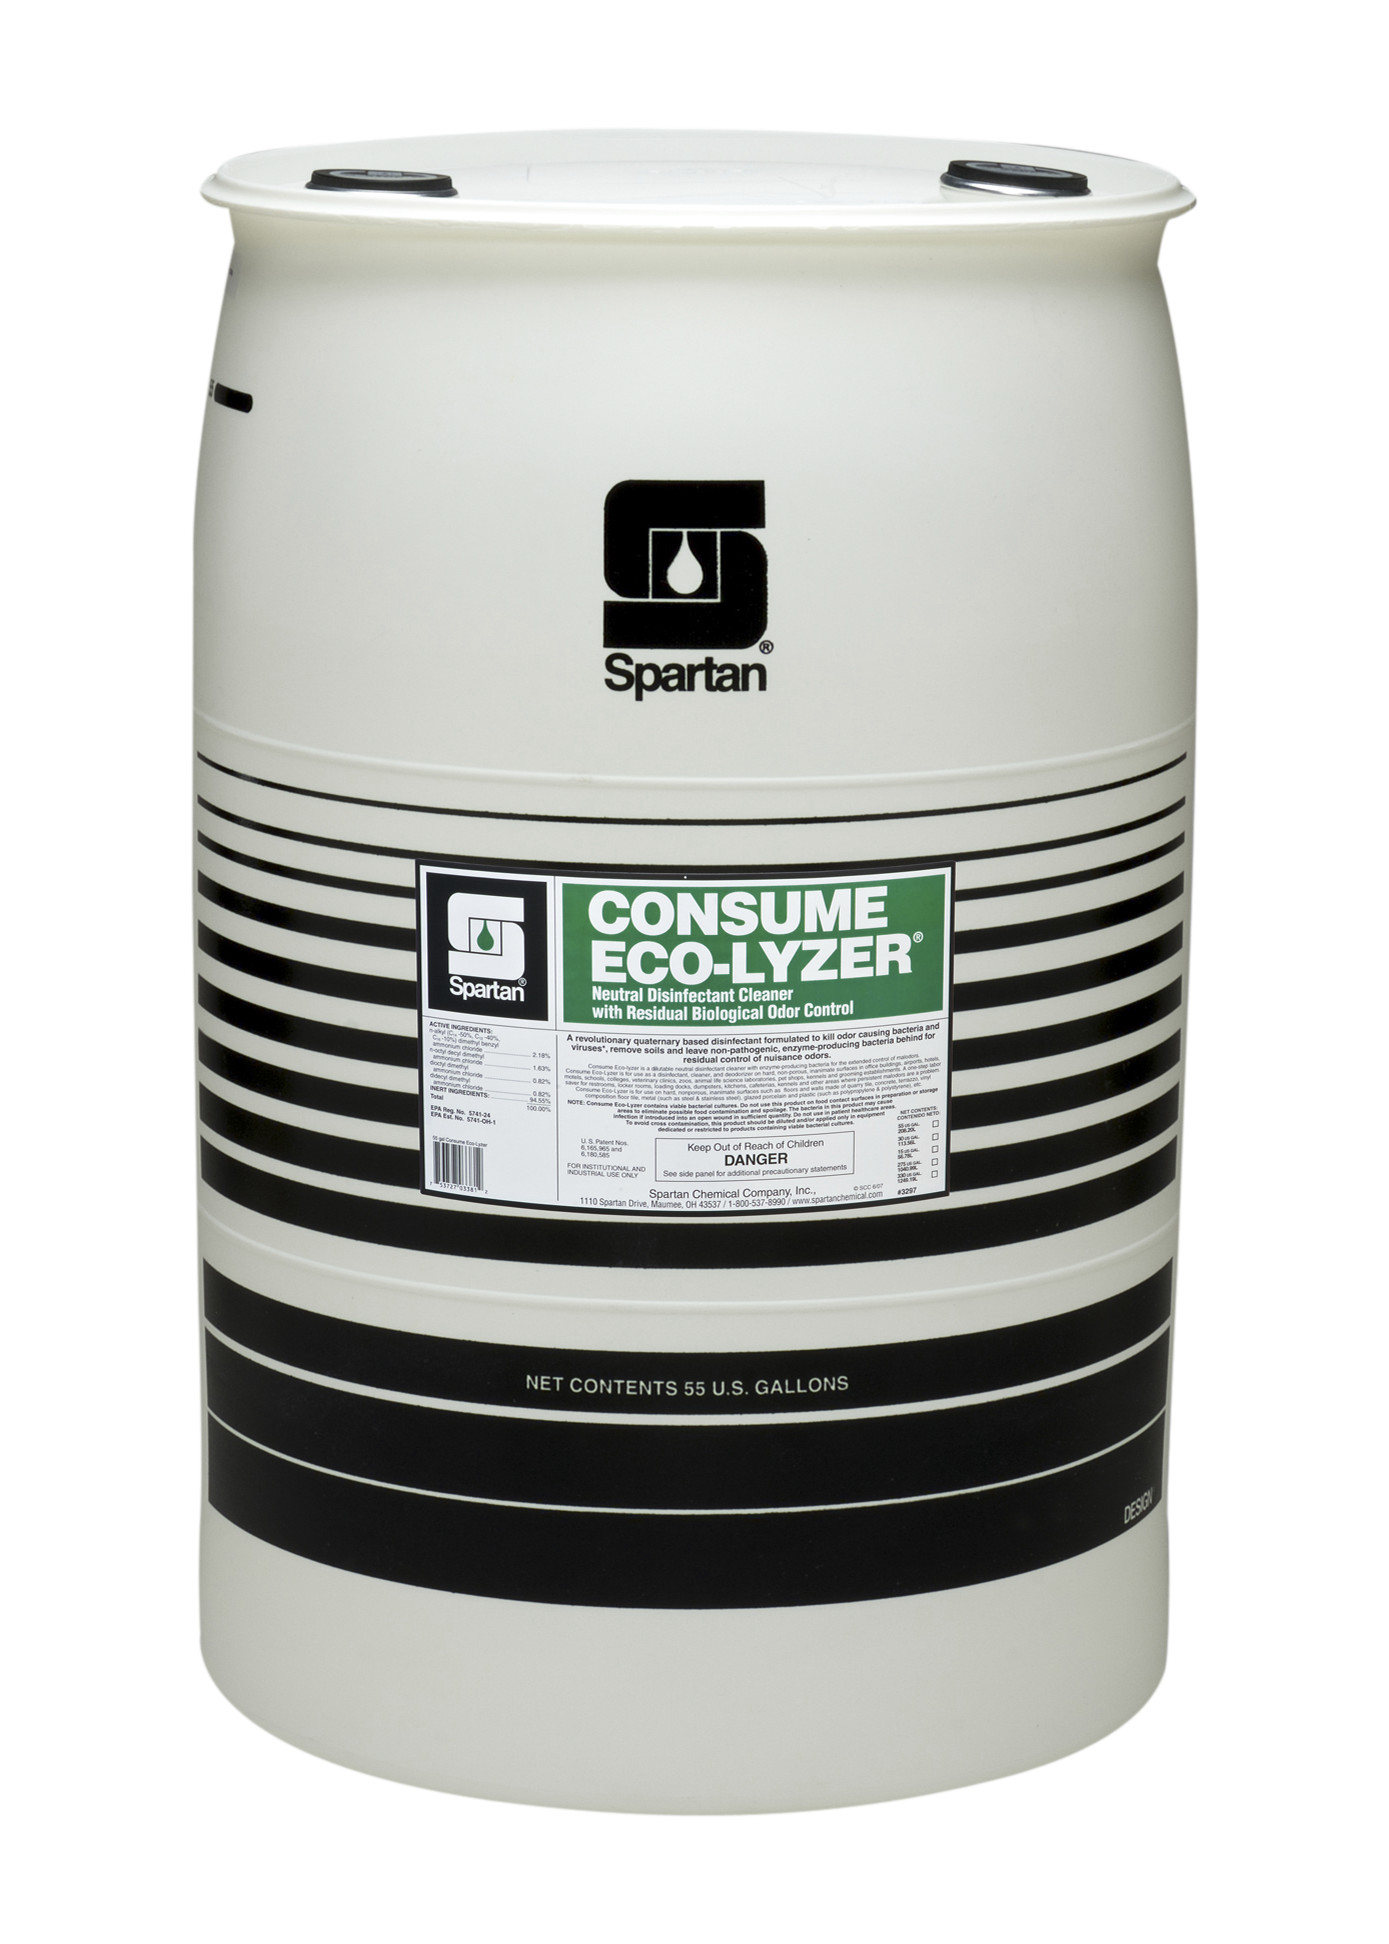 Spartan Chemical Company Consume Eco-Lyzer, 55 GAL DRUM